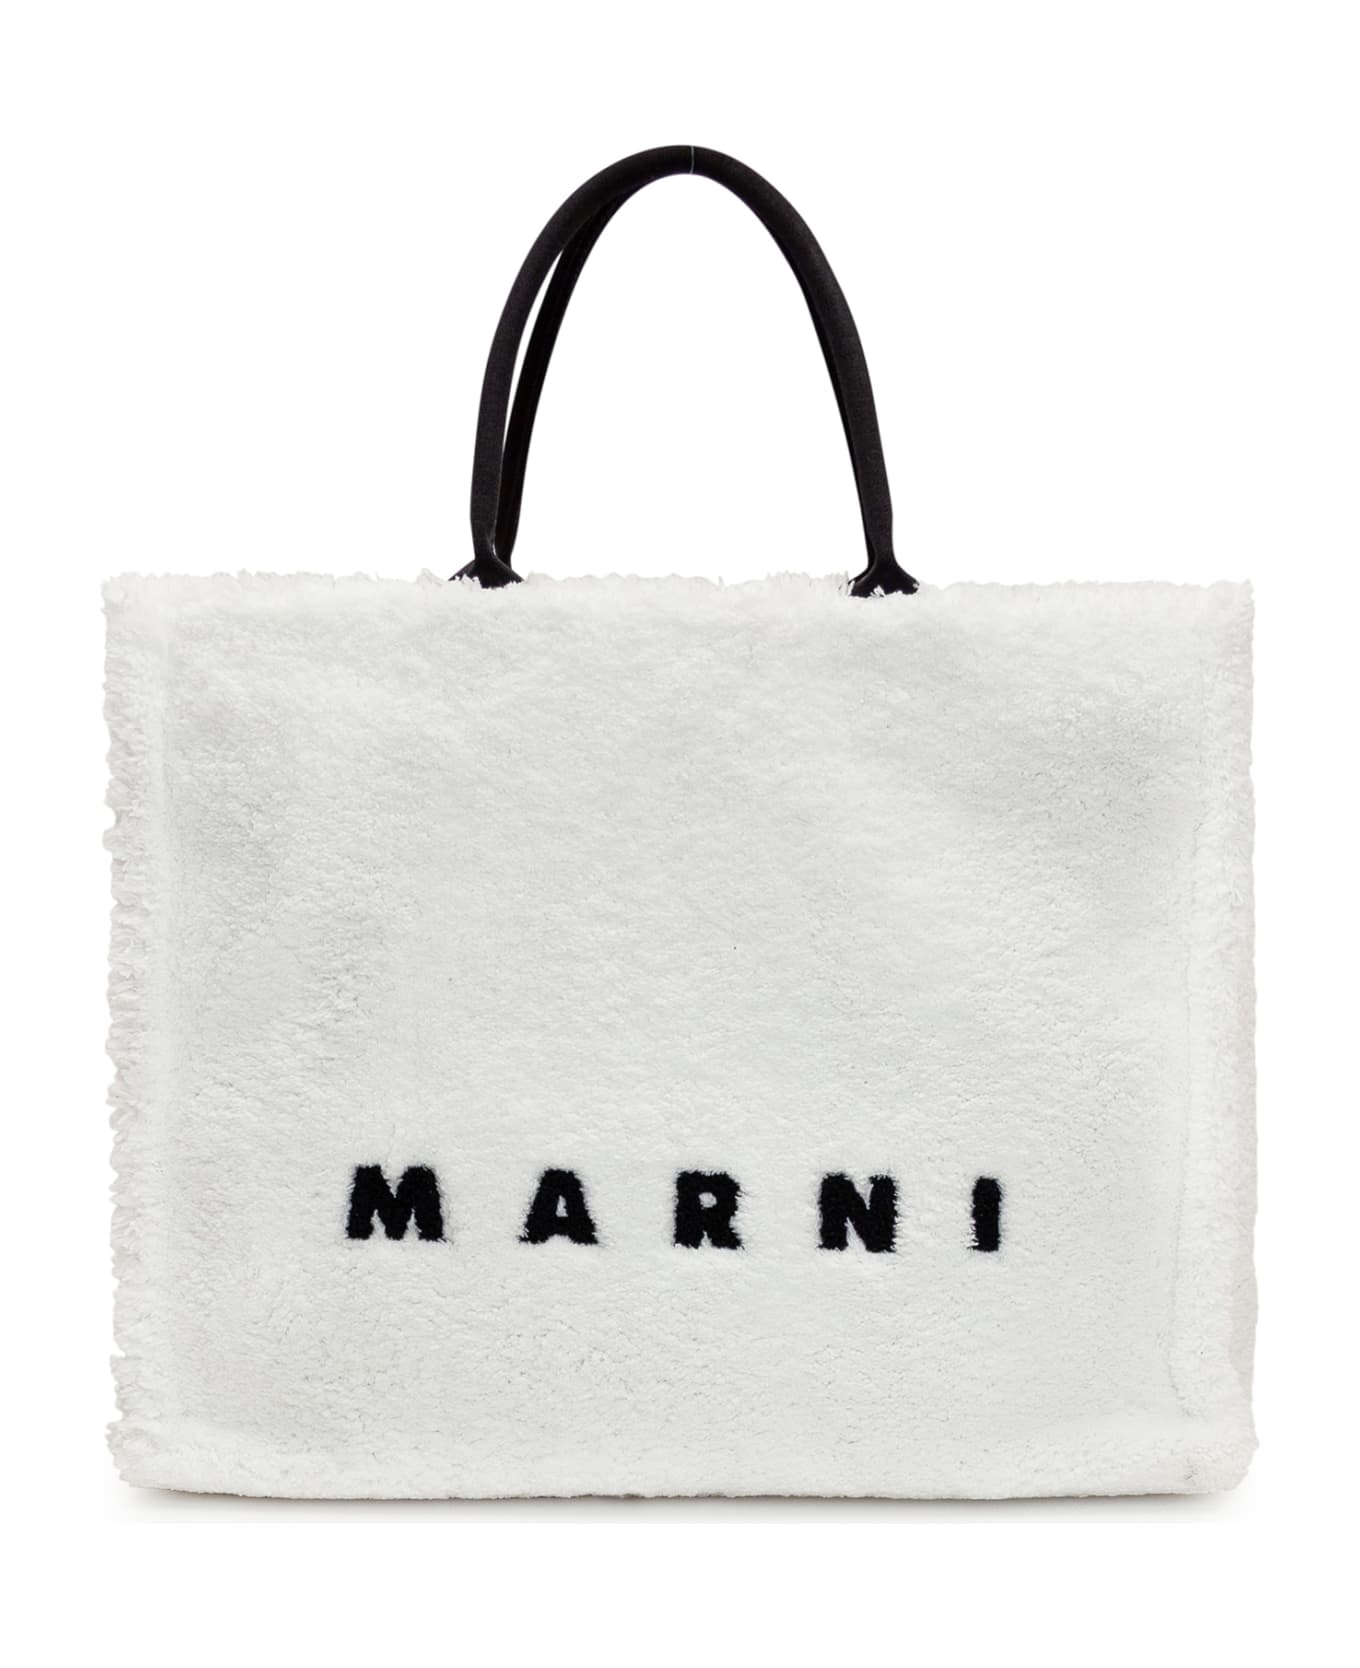 Marni Sponge Shopping Bag - BIANCO